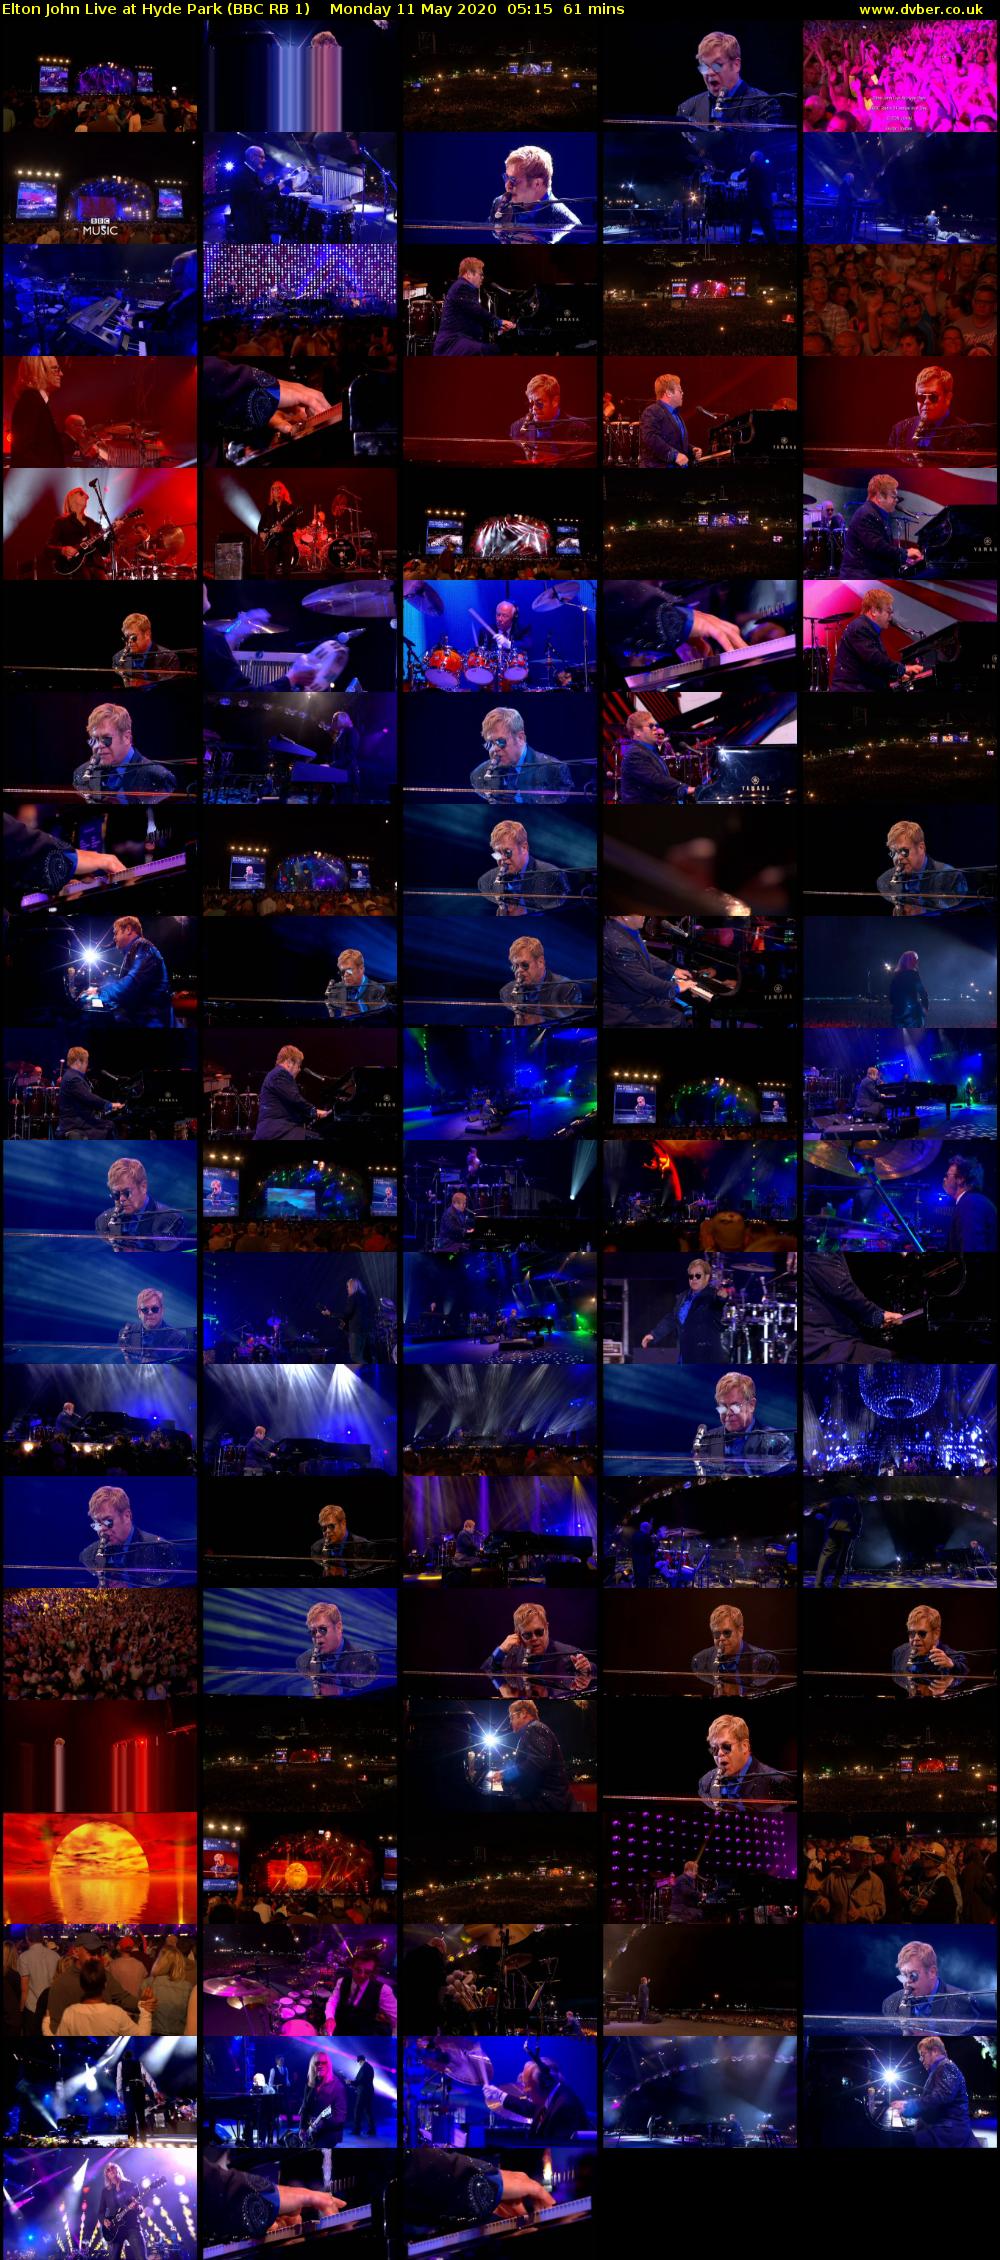 Elton John Live at Hyde Park (BBC RB 1) Monday 11 May 2020 05:15 - 06:16